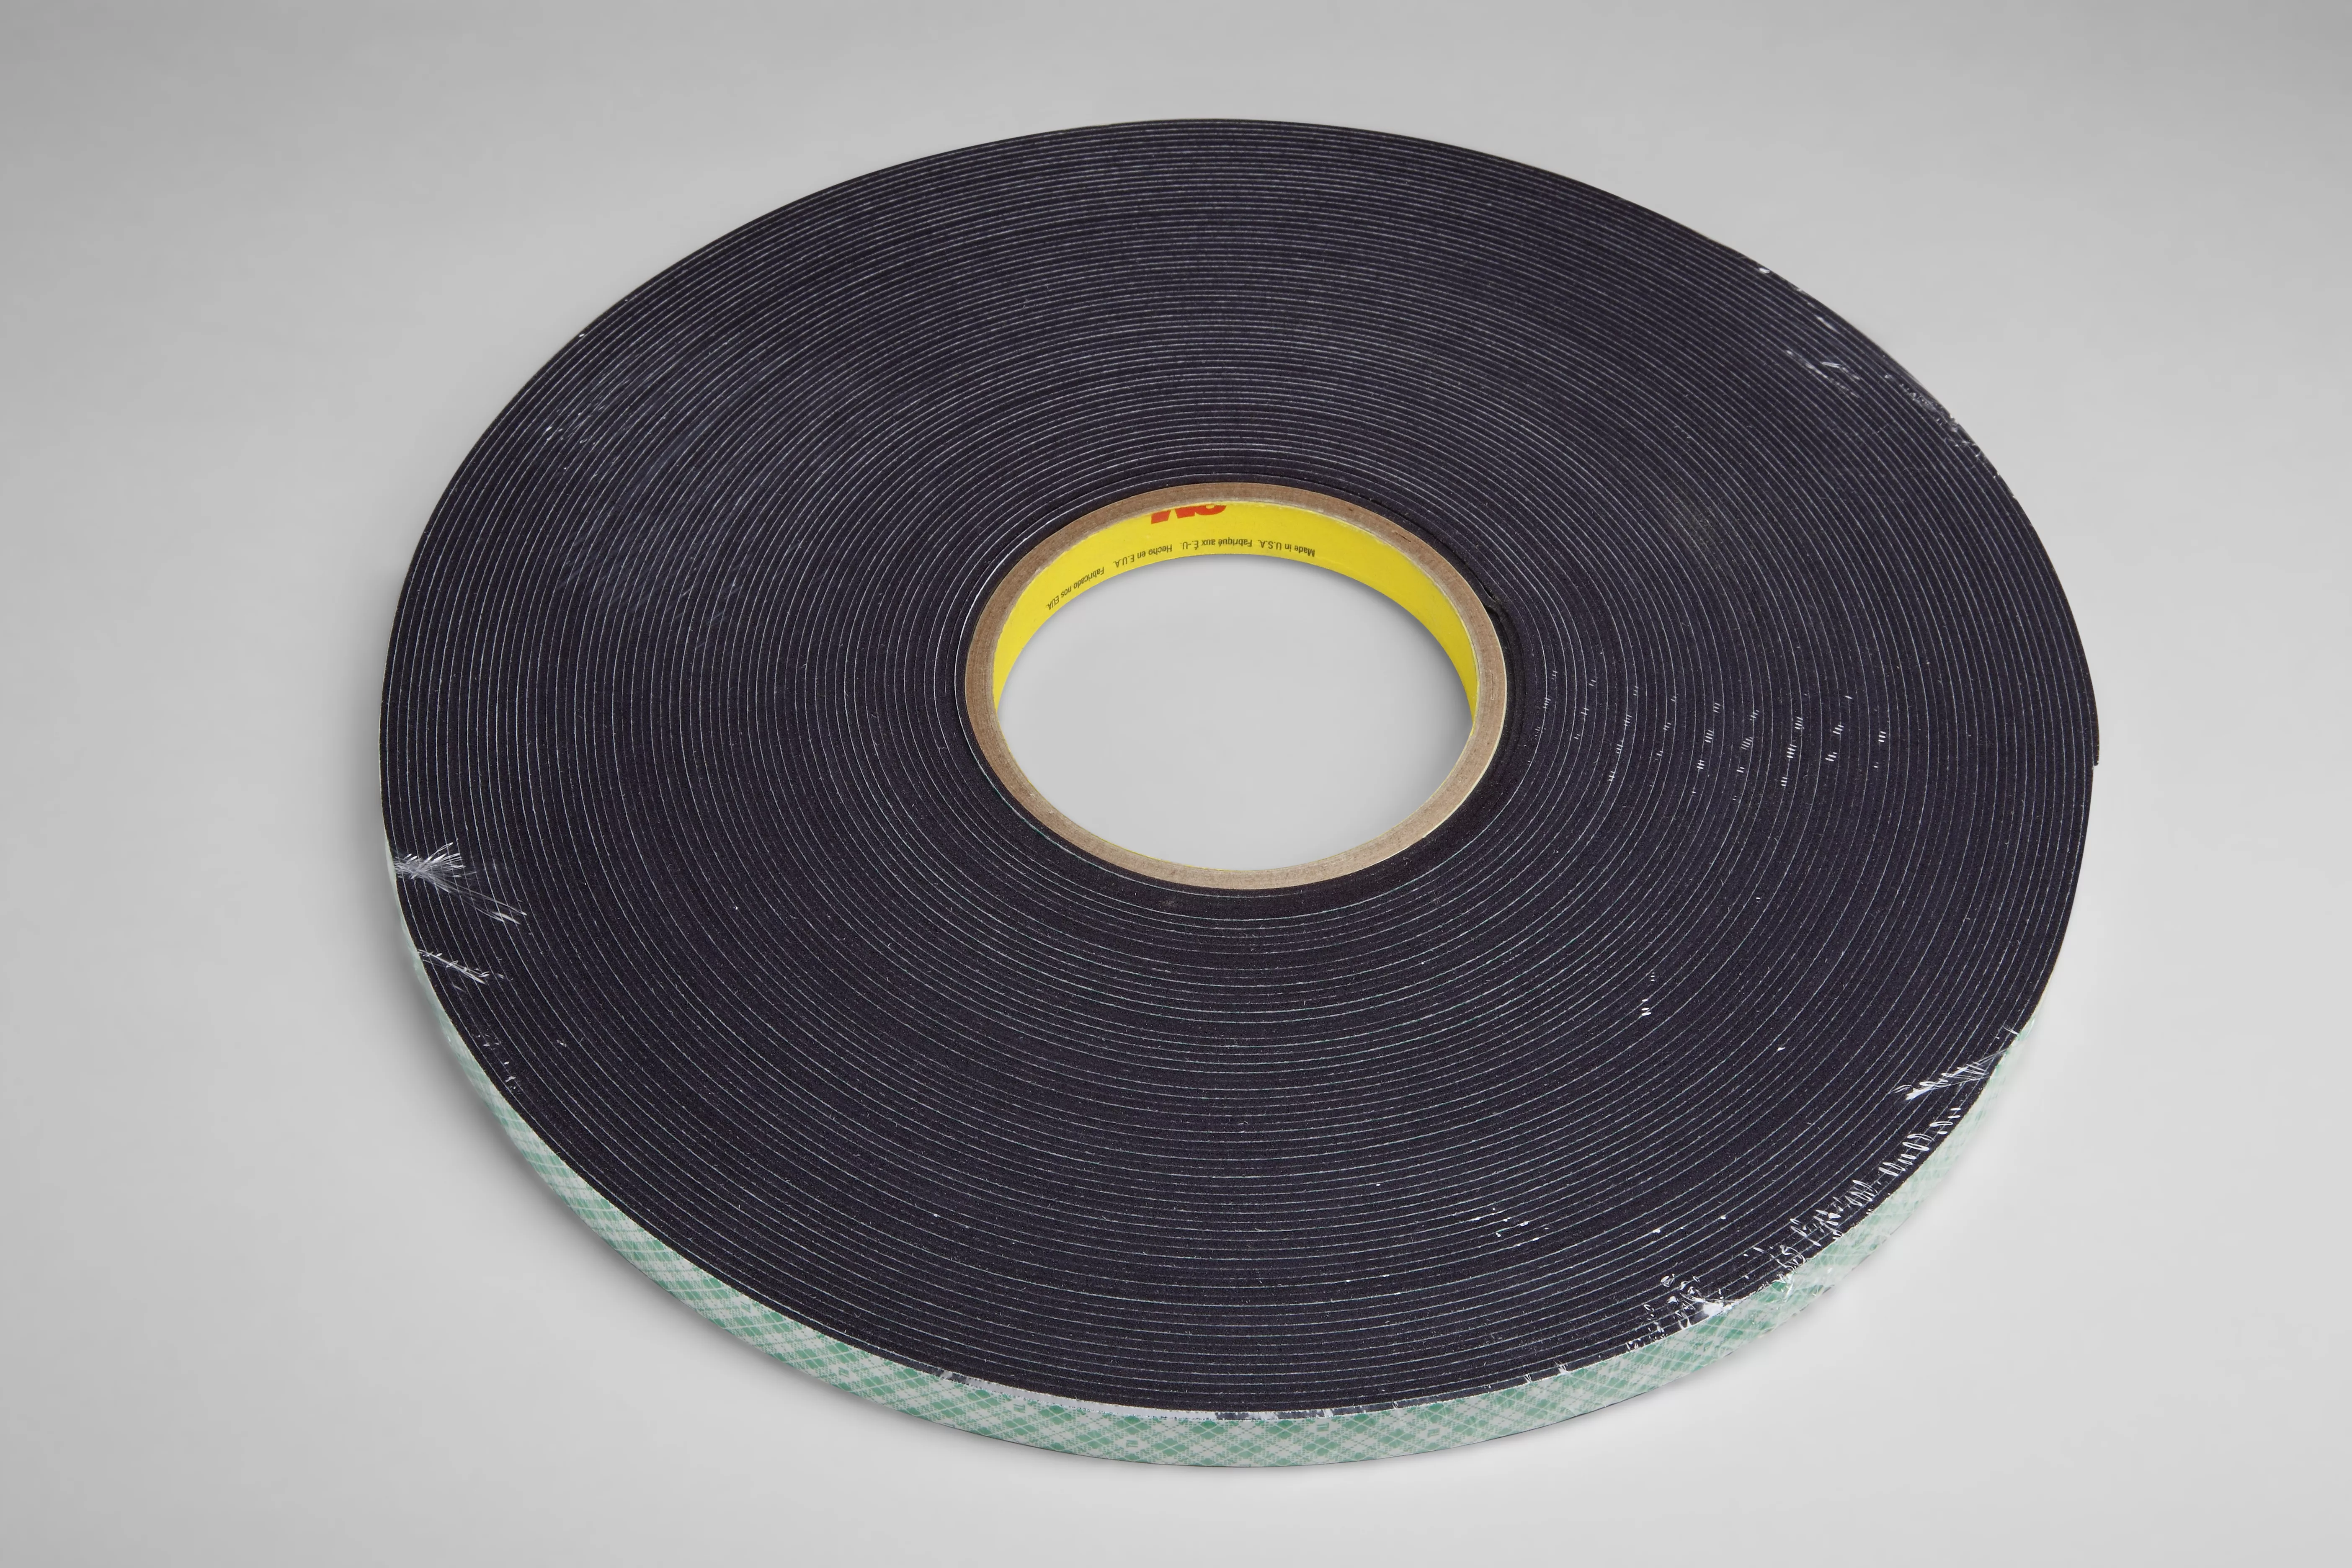 3M™ Double Coated Urethane Foam Tape 4056, Black, 3/4 in x 36 yd, 62
mil, 12 Roll/Case